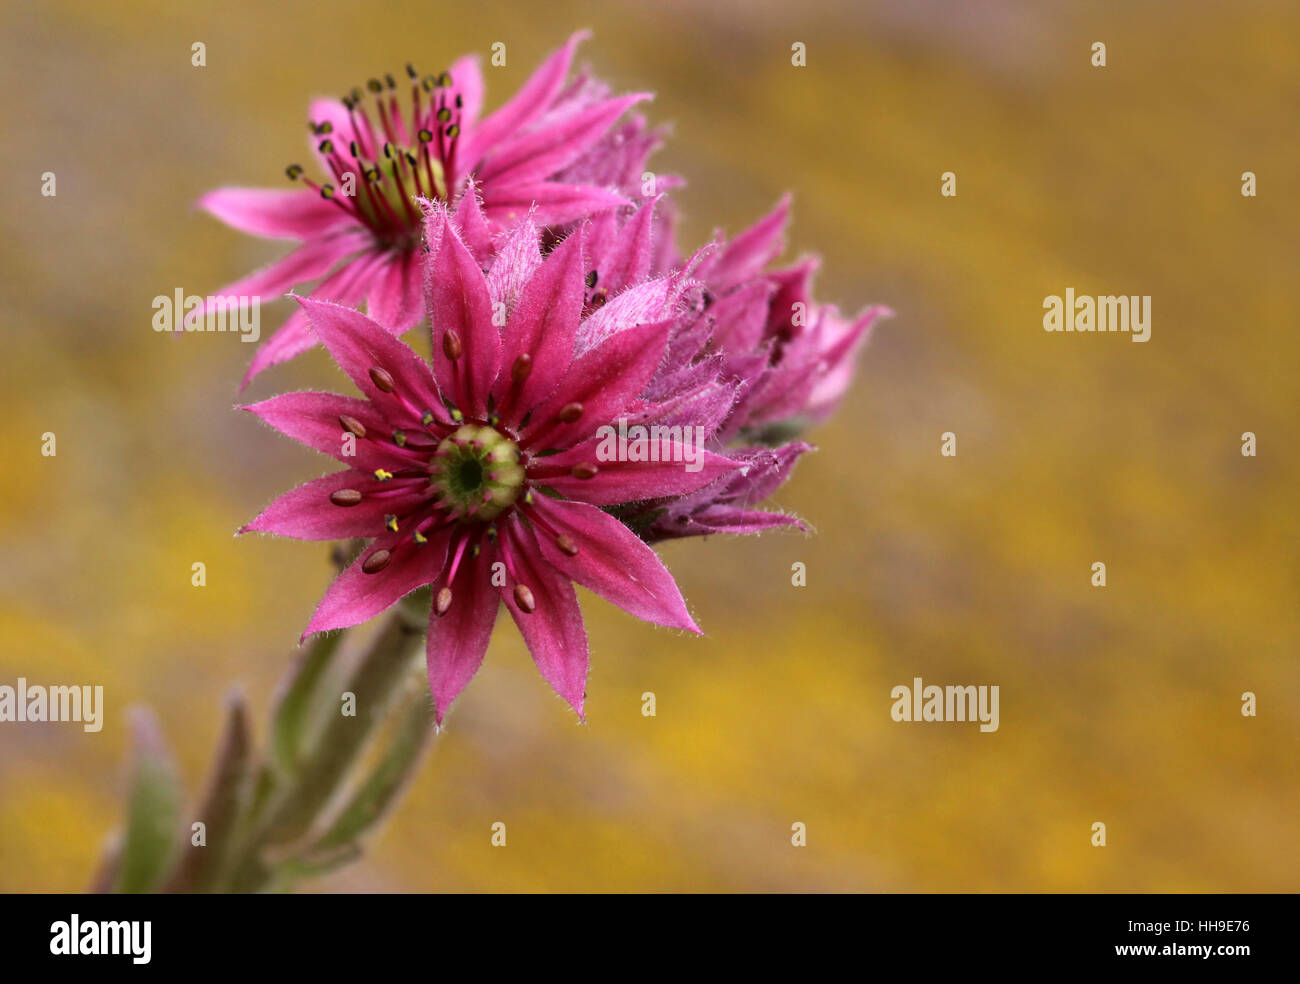 pink, flower, flowers, plant, ocher, damask rose, yellow, pink, Stock Photo